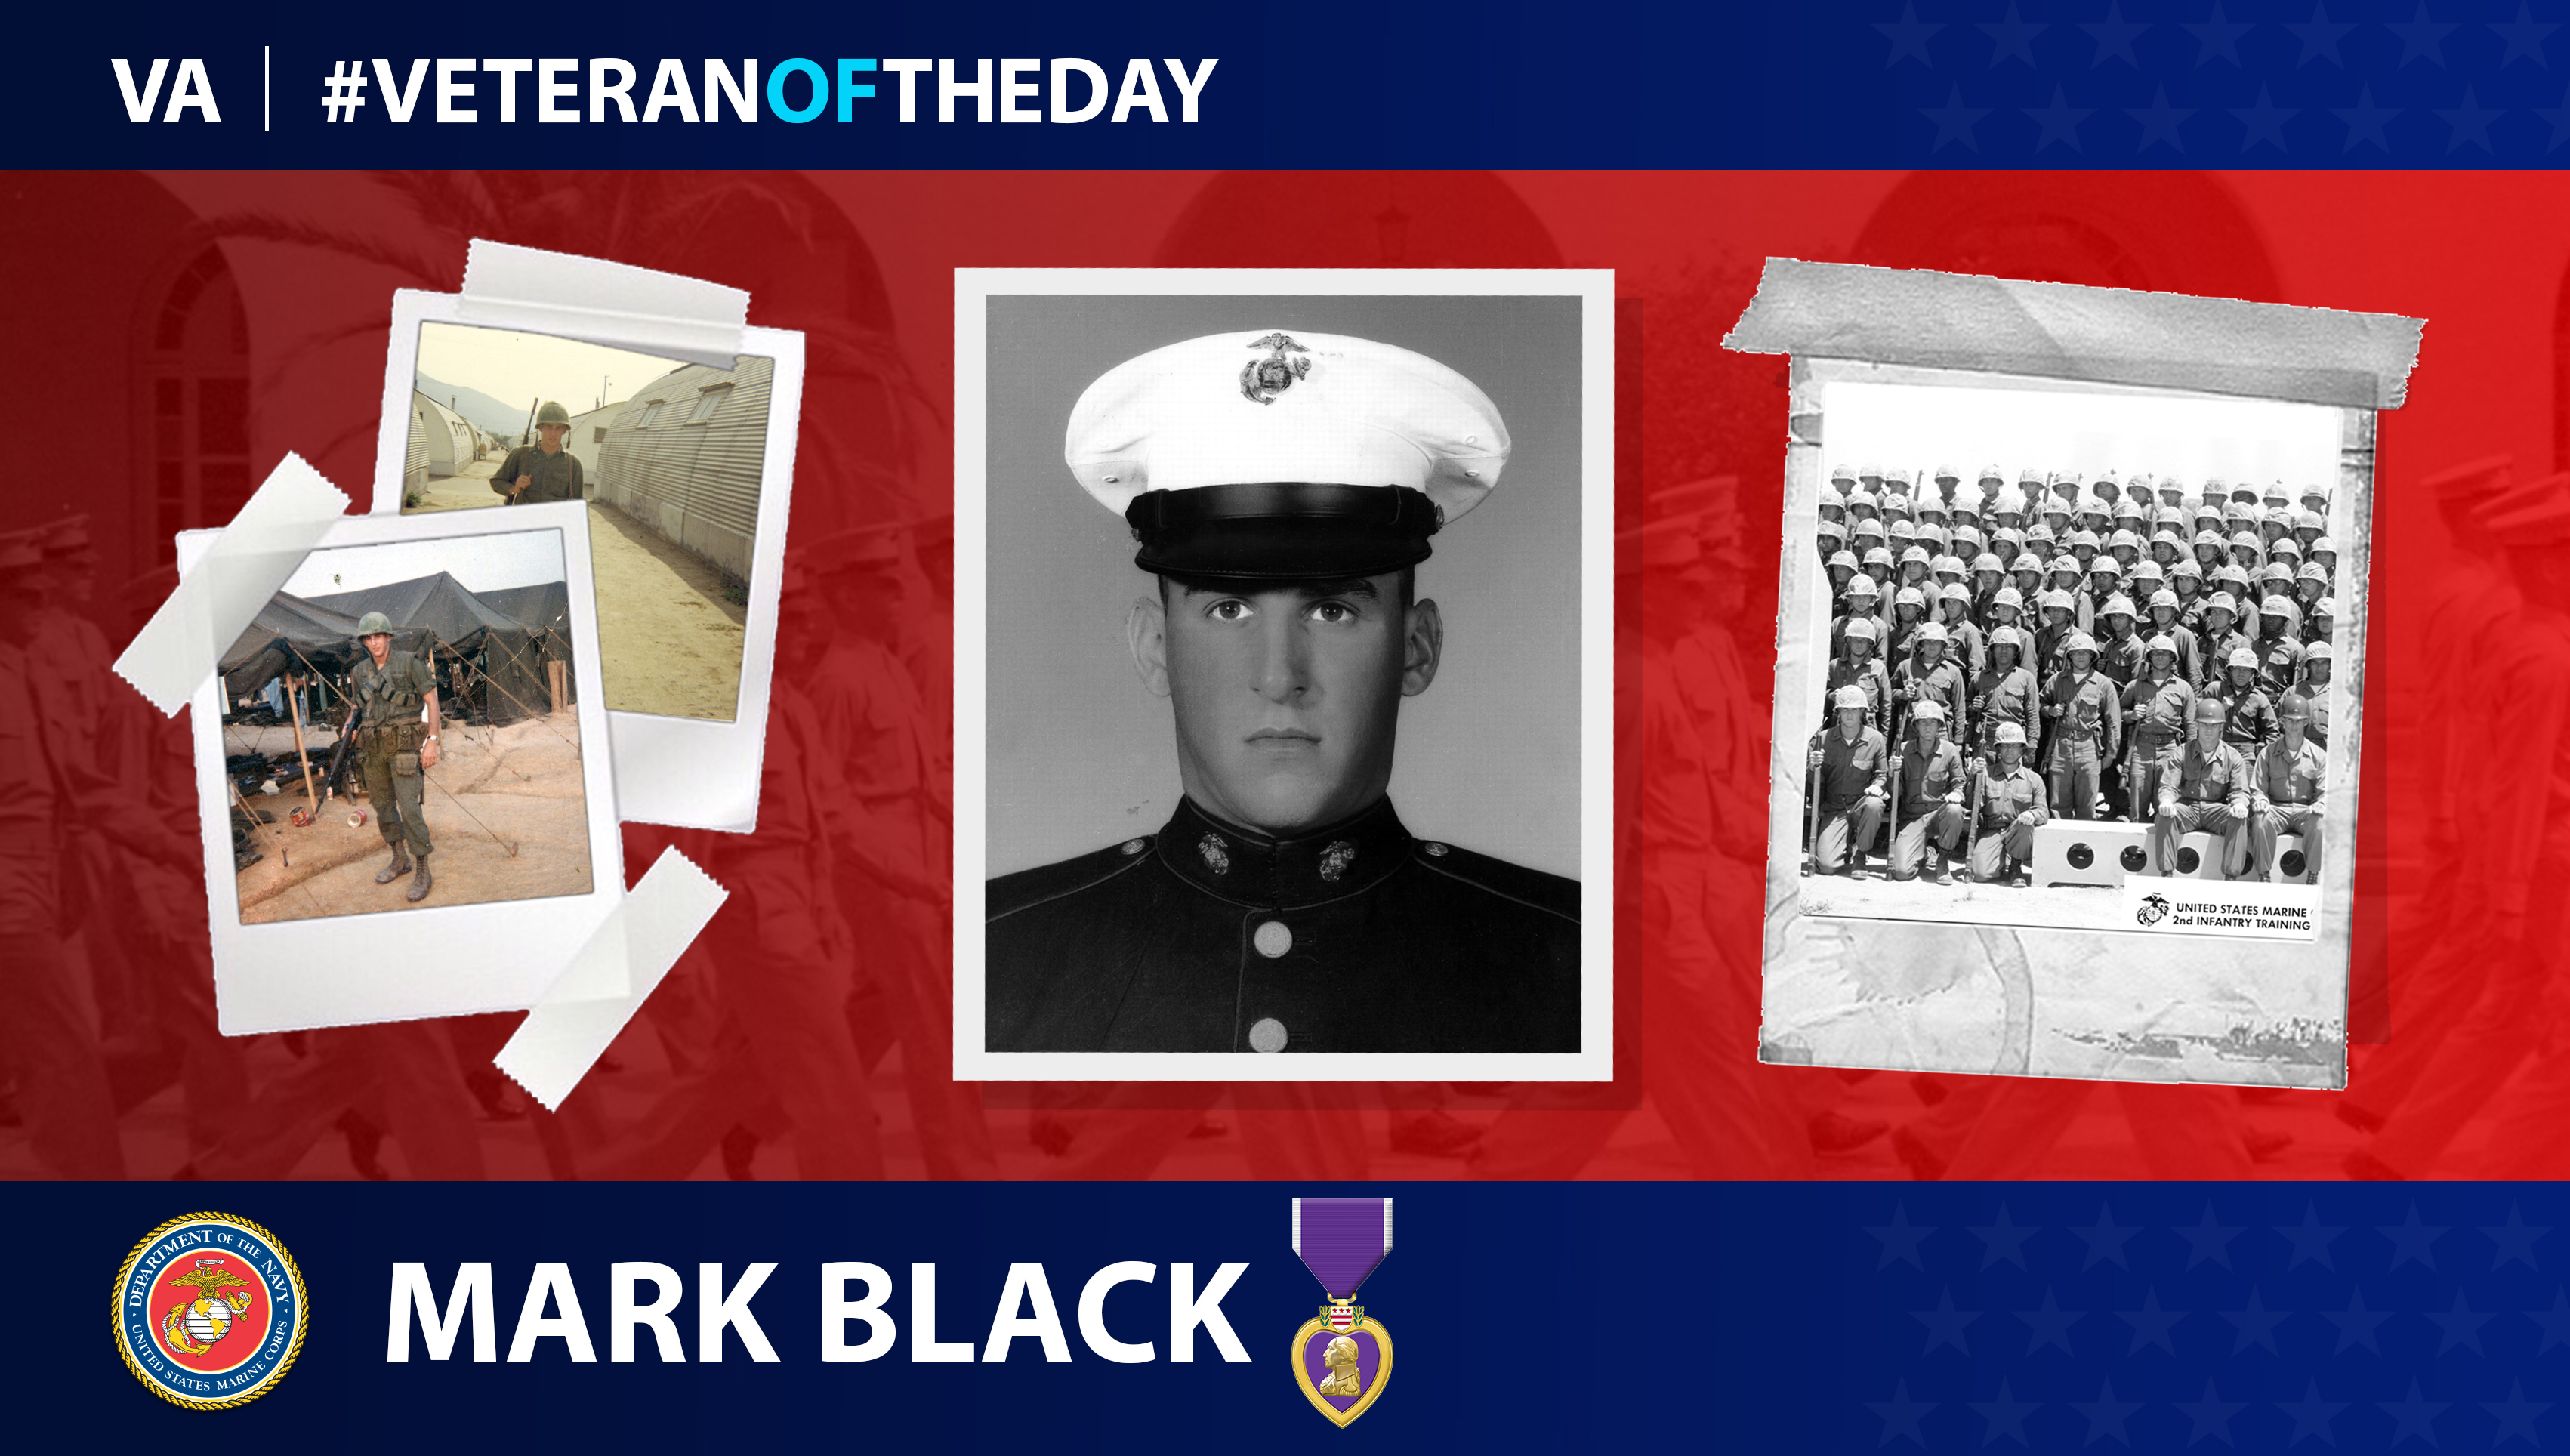 Marine Veteran Mark R. Black is today's Veteran of the Day.